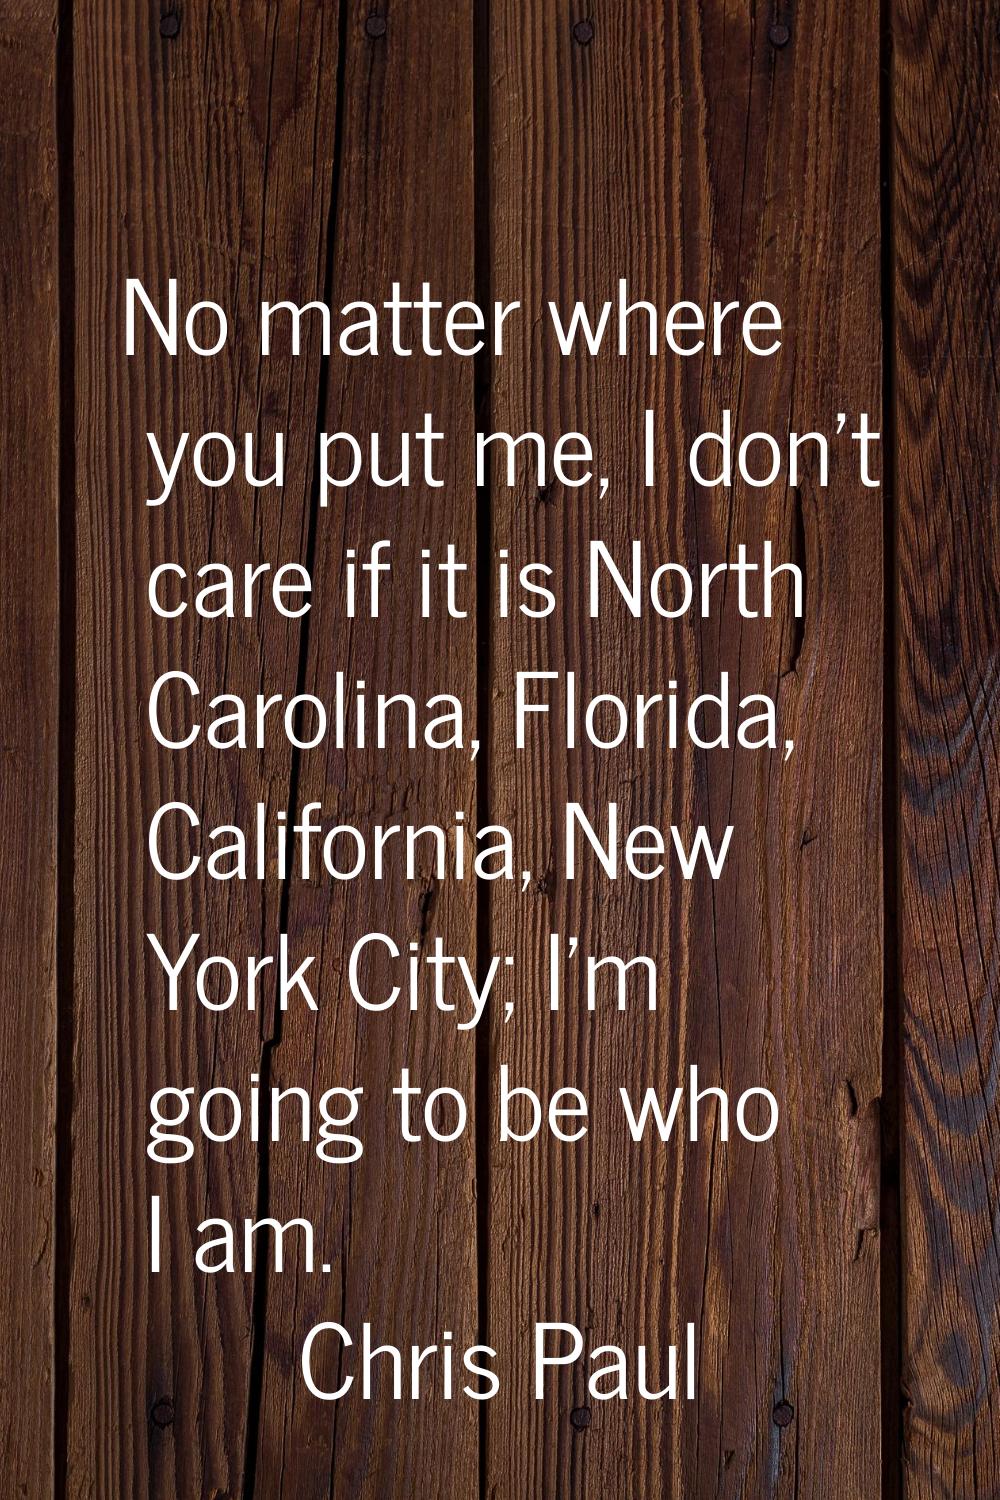 No matter where you put me, I don't care if it is North Carolina, Florida, California, New York Cit